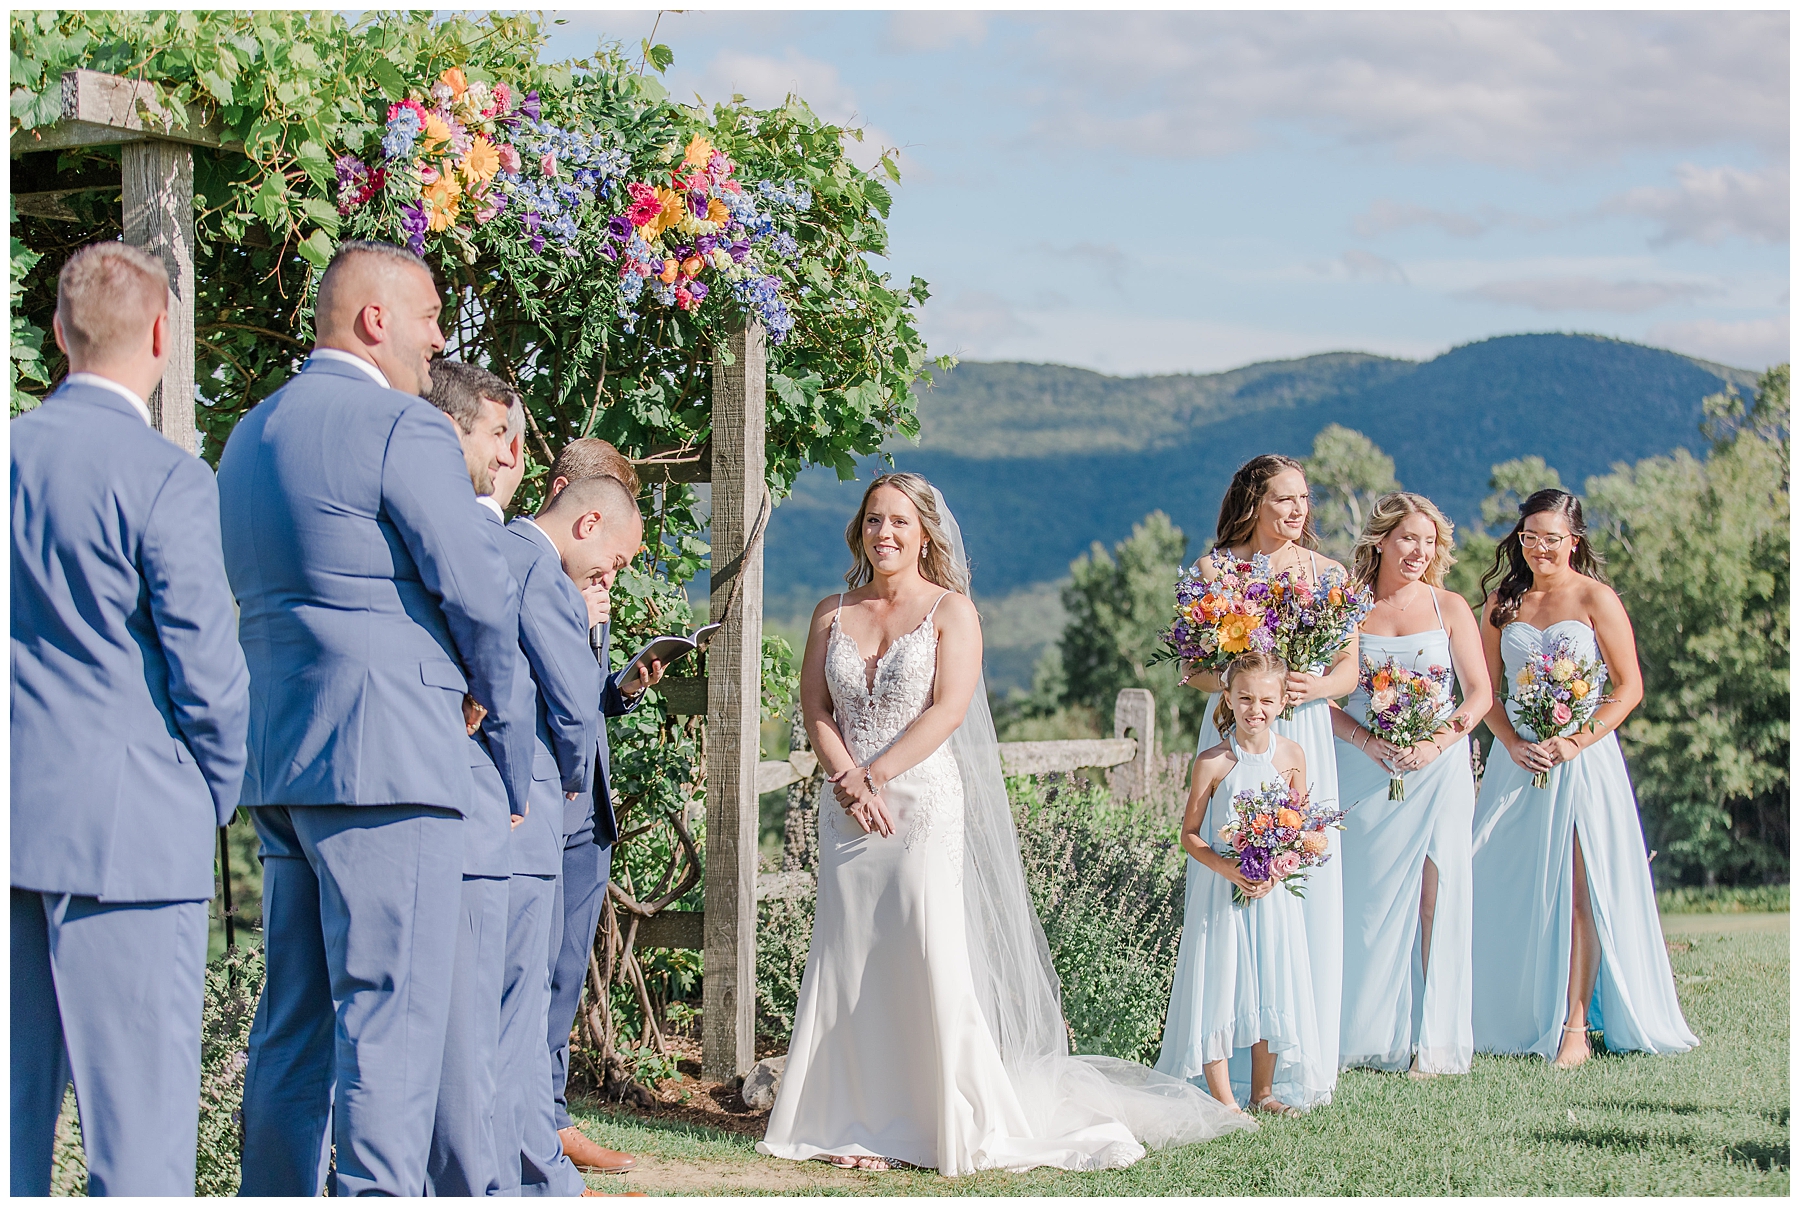 Dreamy Vermont Wedding at Mountain Top Inn & Resort